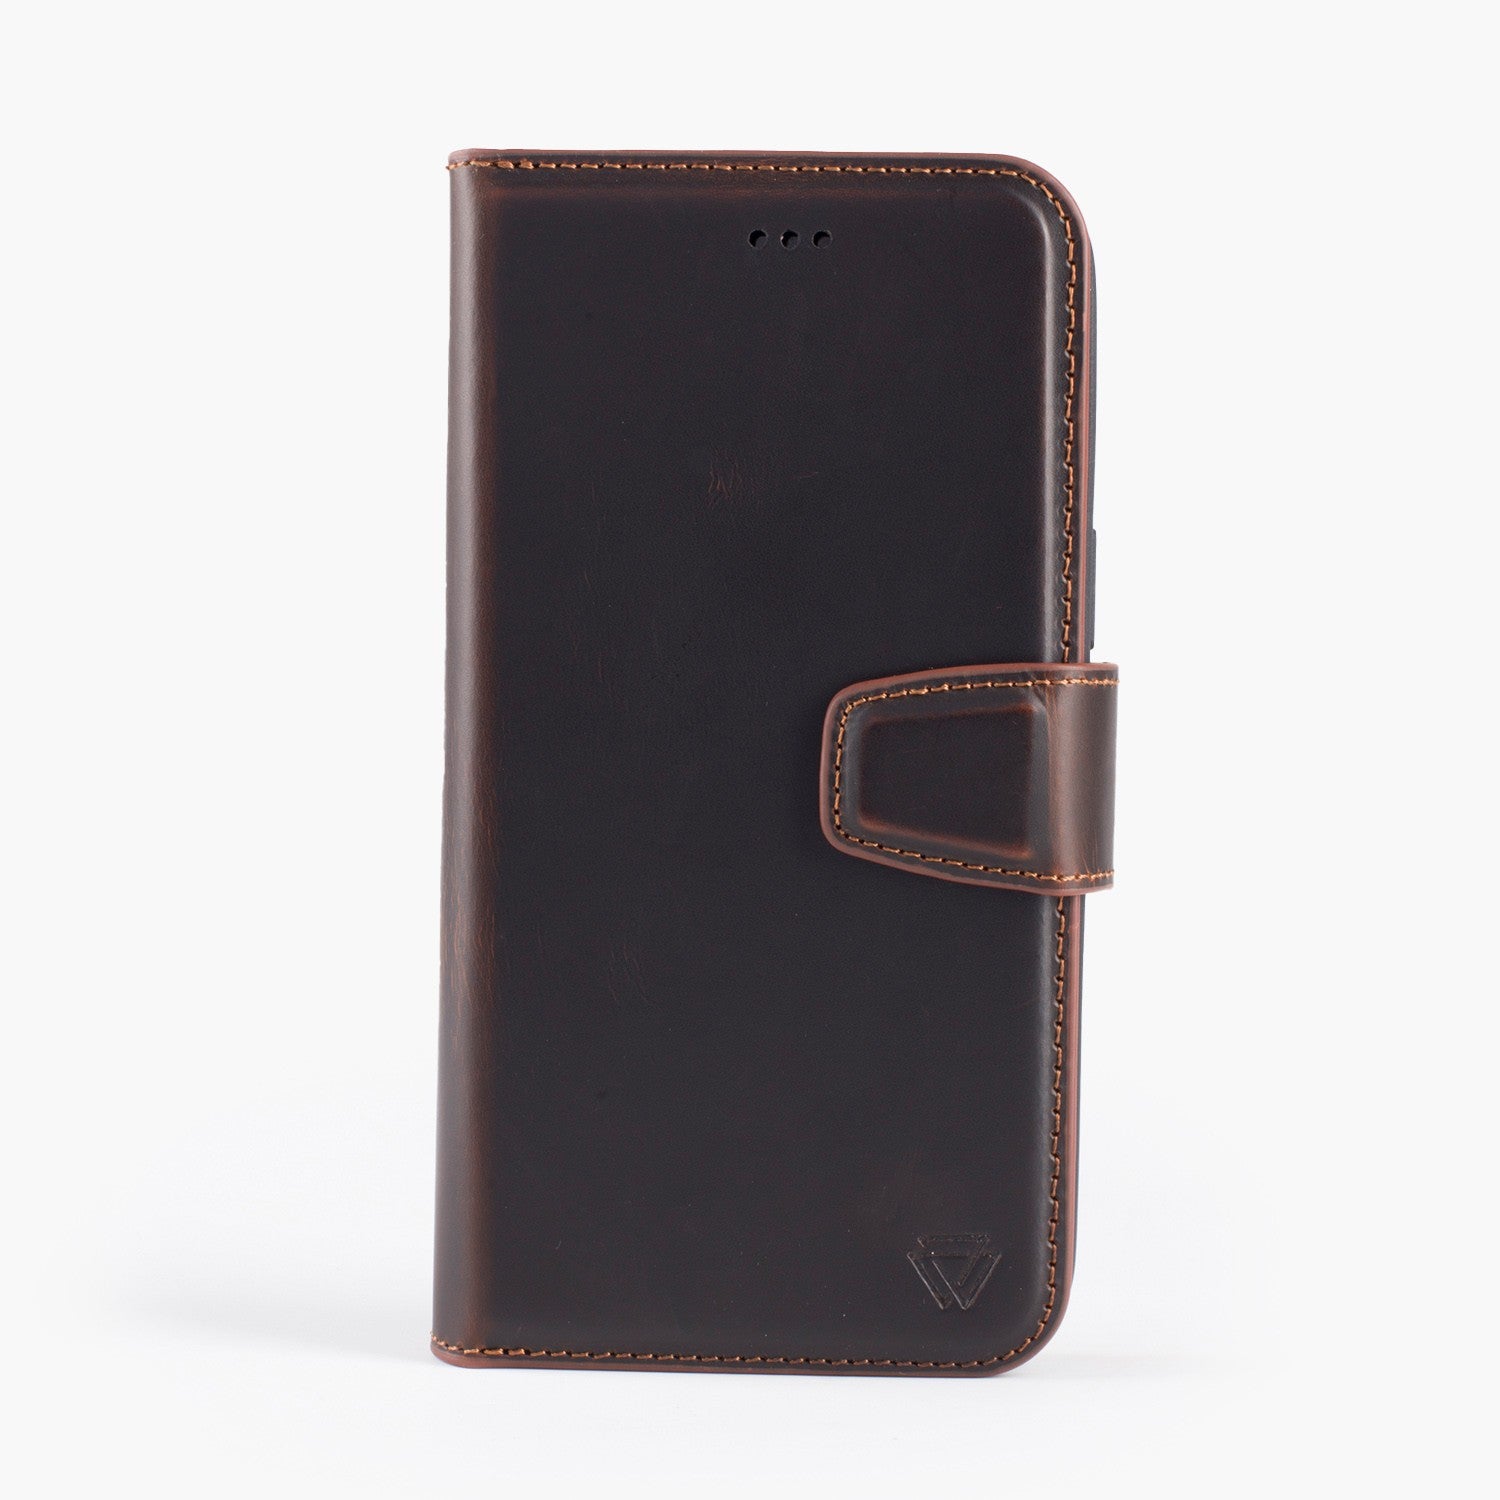 Wachikopa leather Magic Book Case 2 in 1 for iPhone 11 Dark Brown